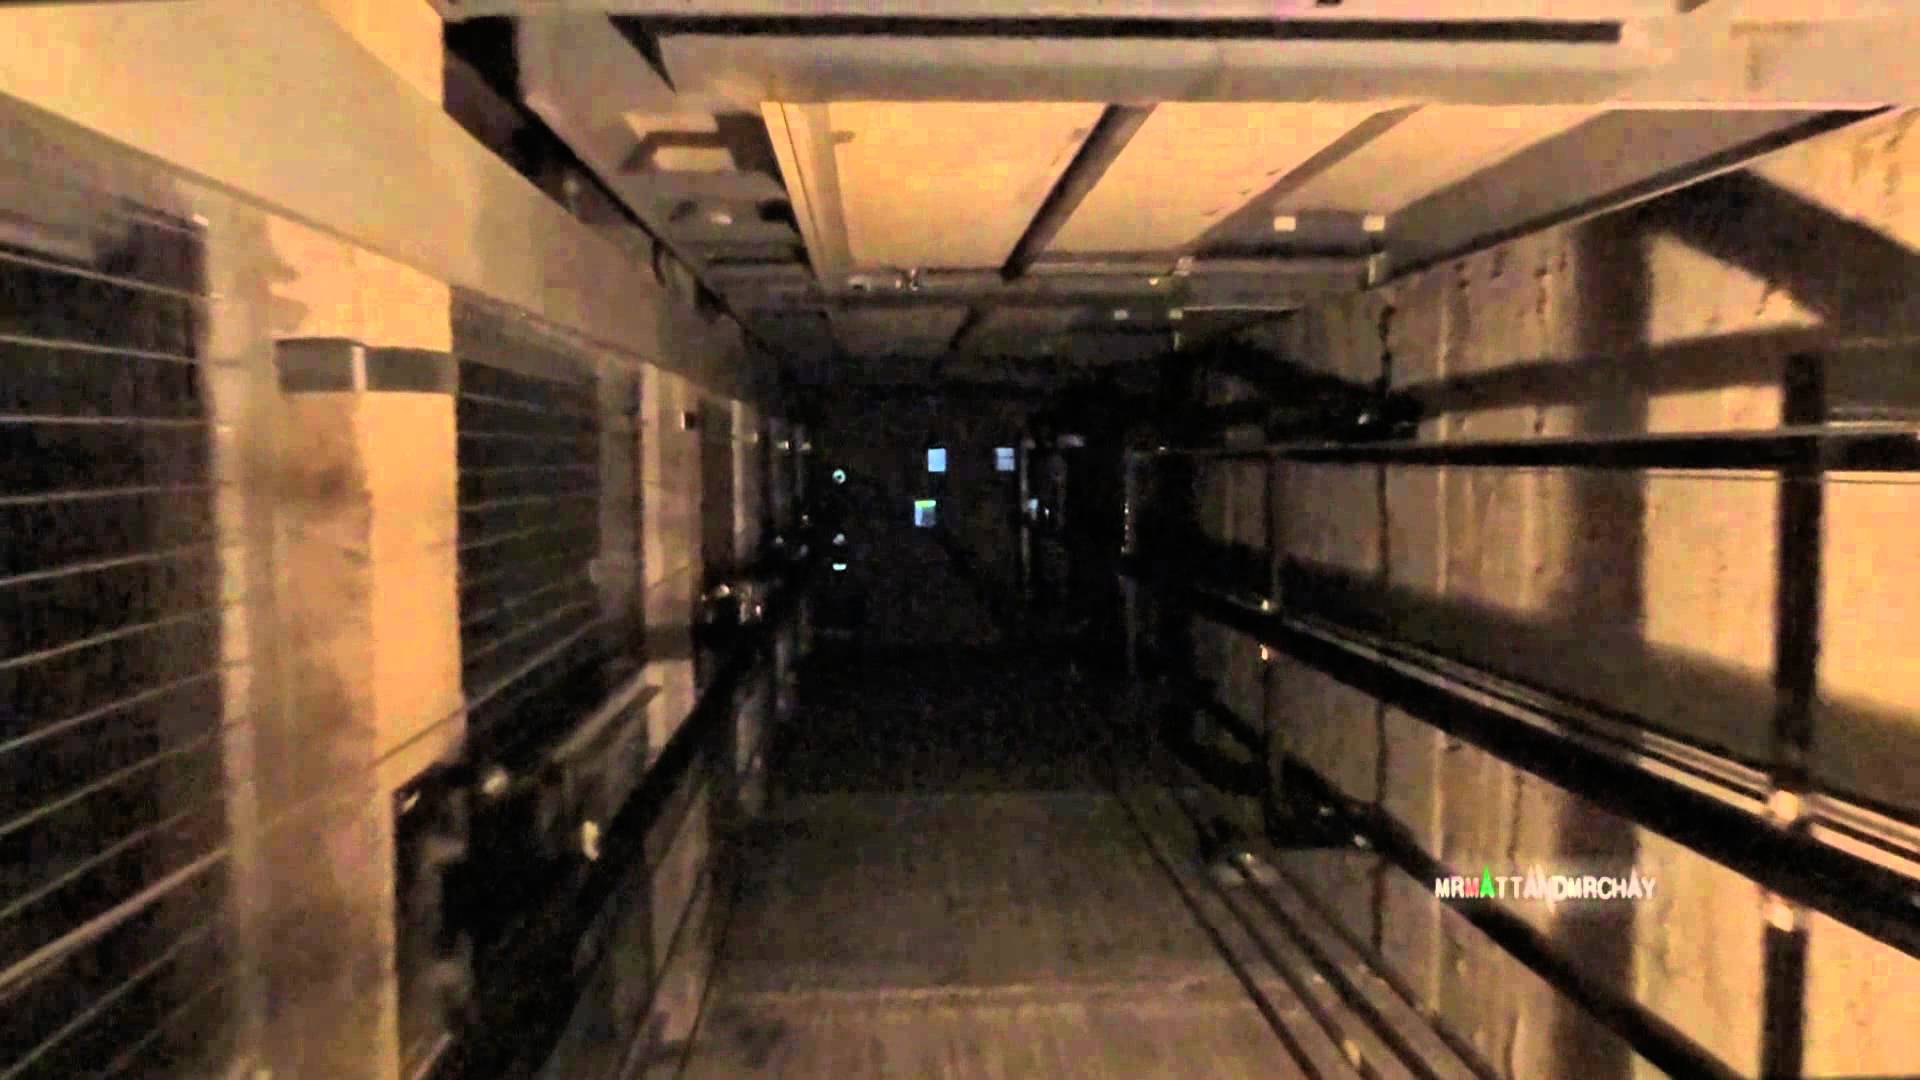 Lift shaft - YouTube